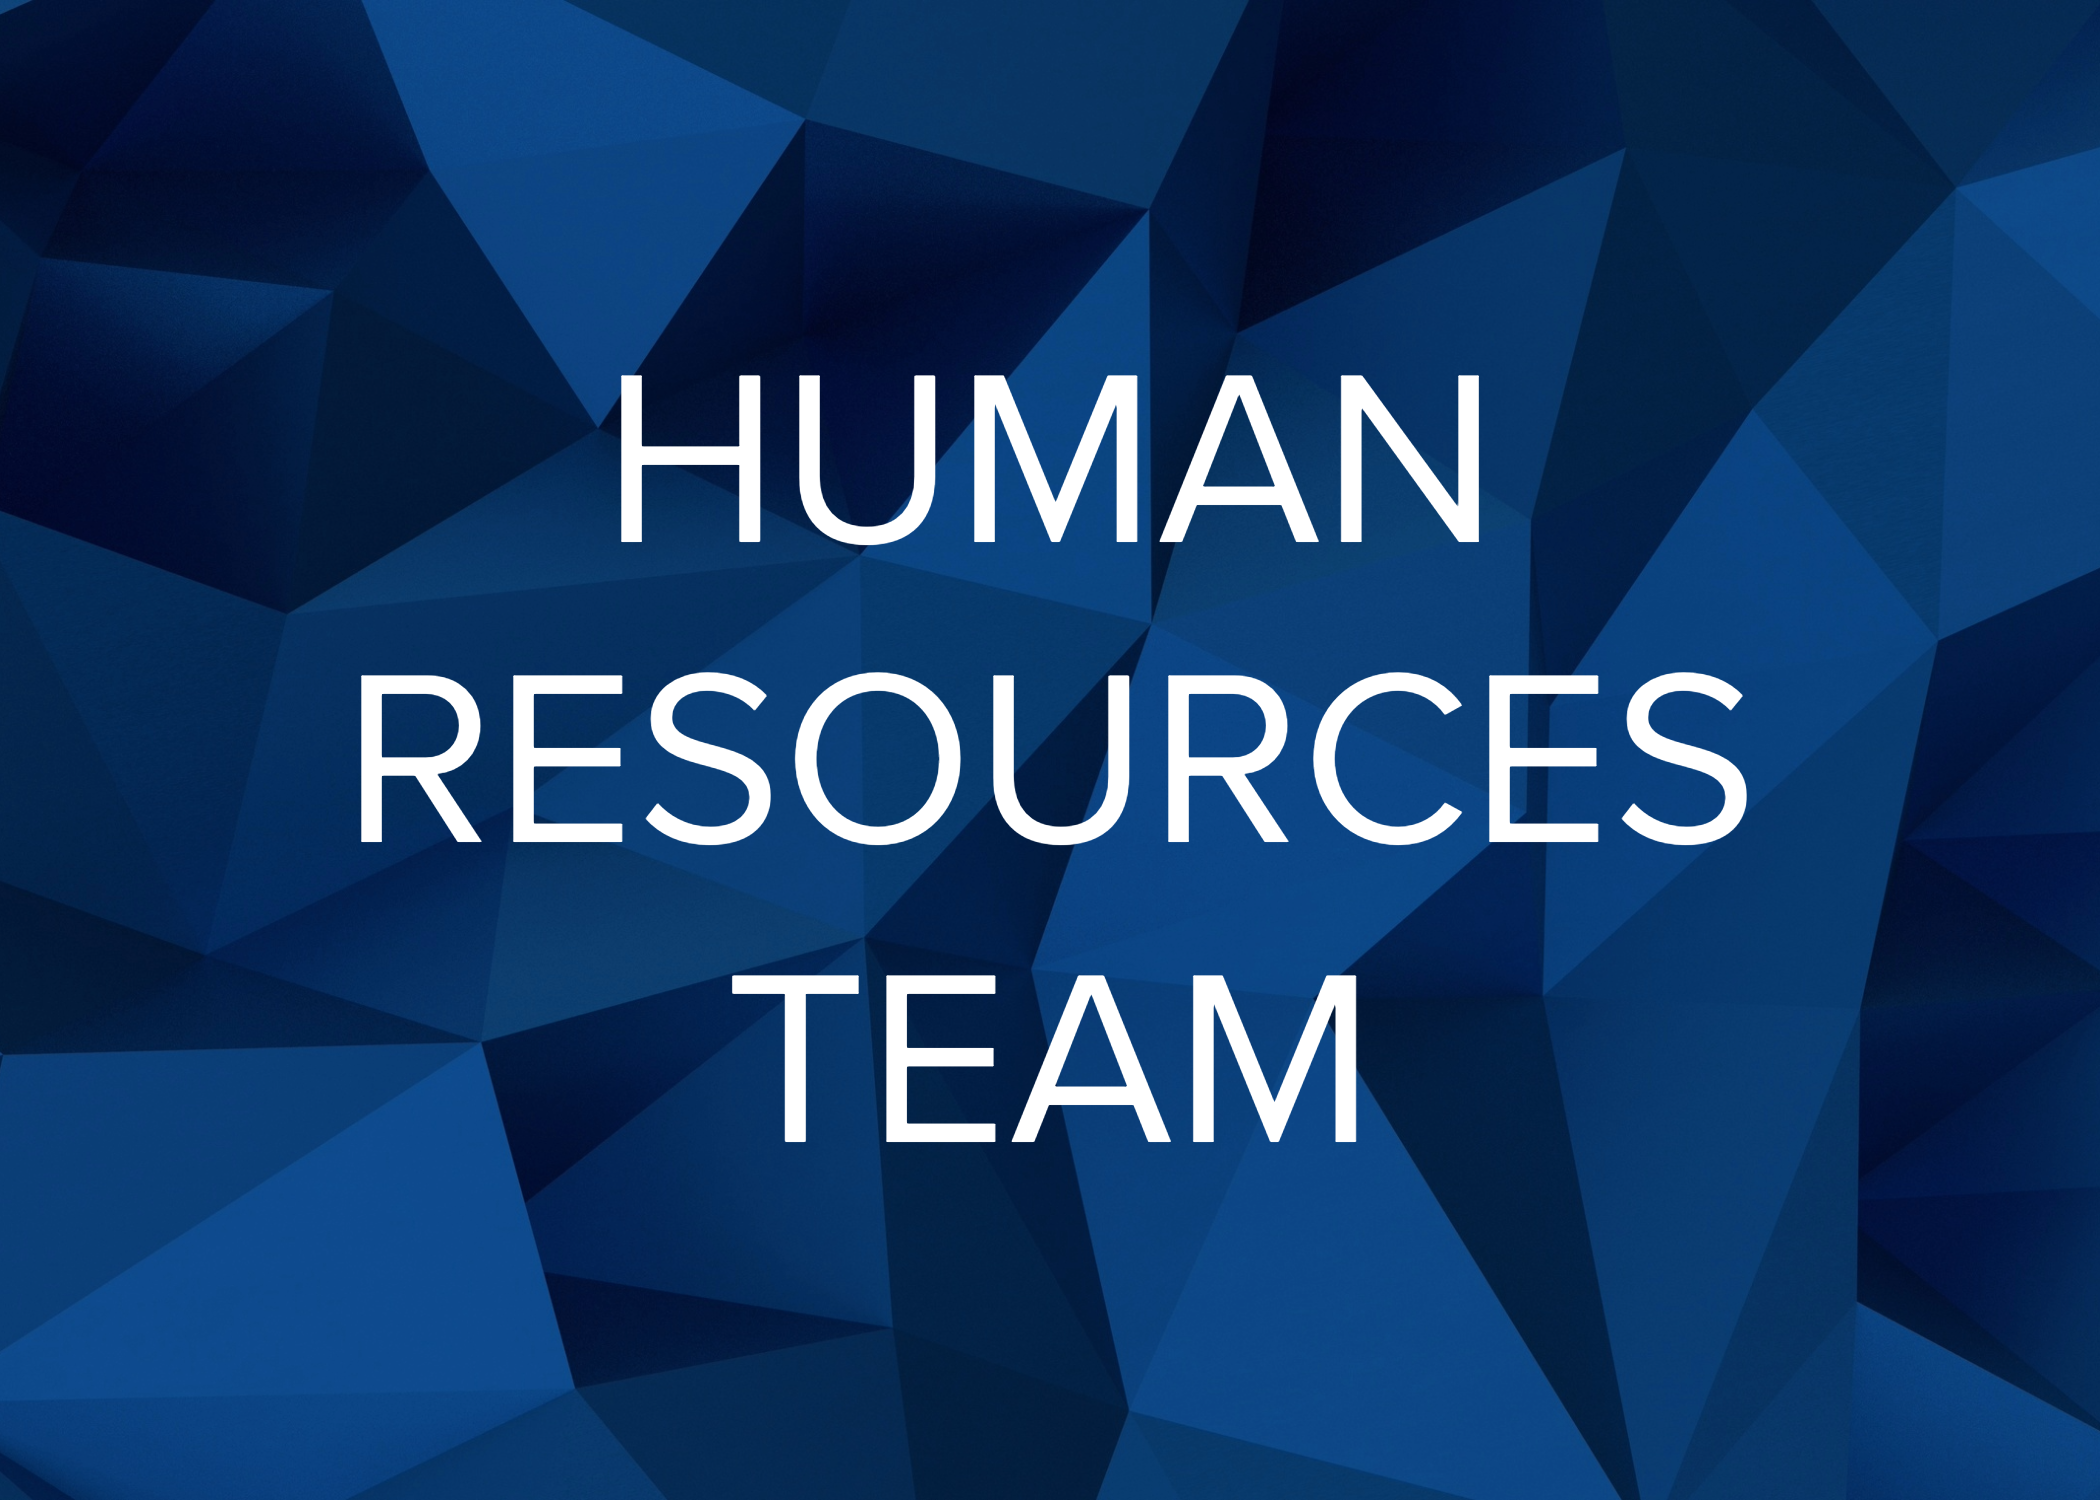 Human Resources Team